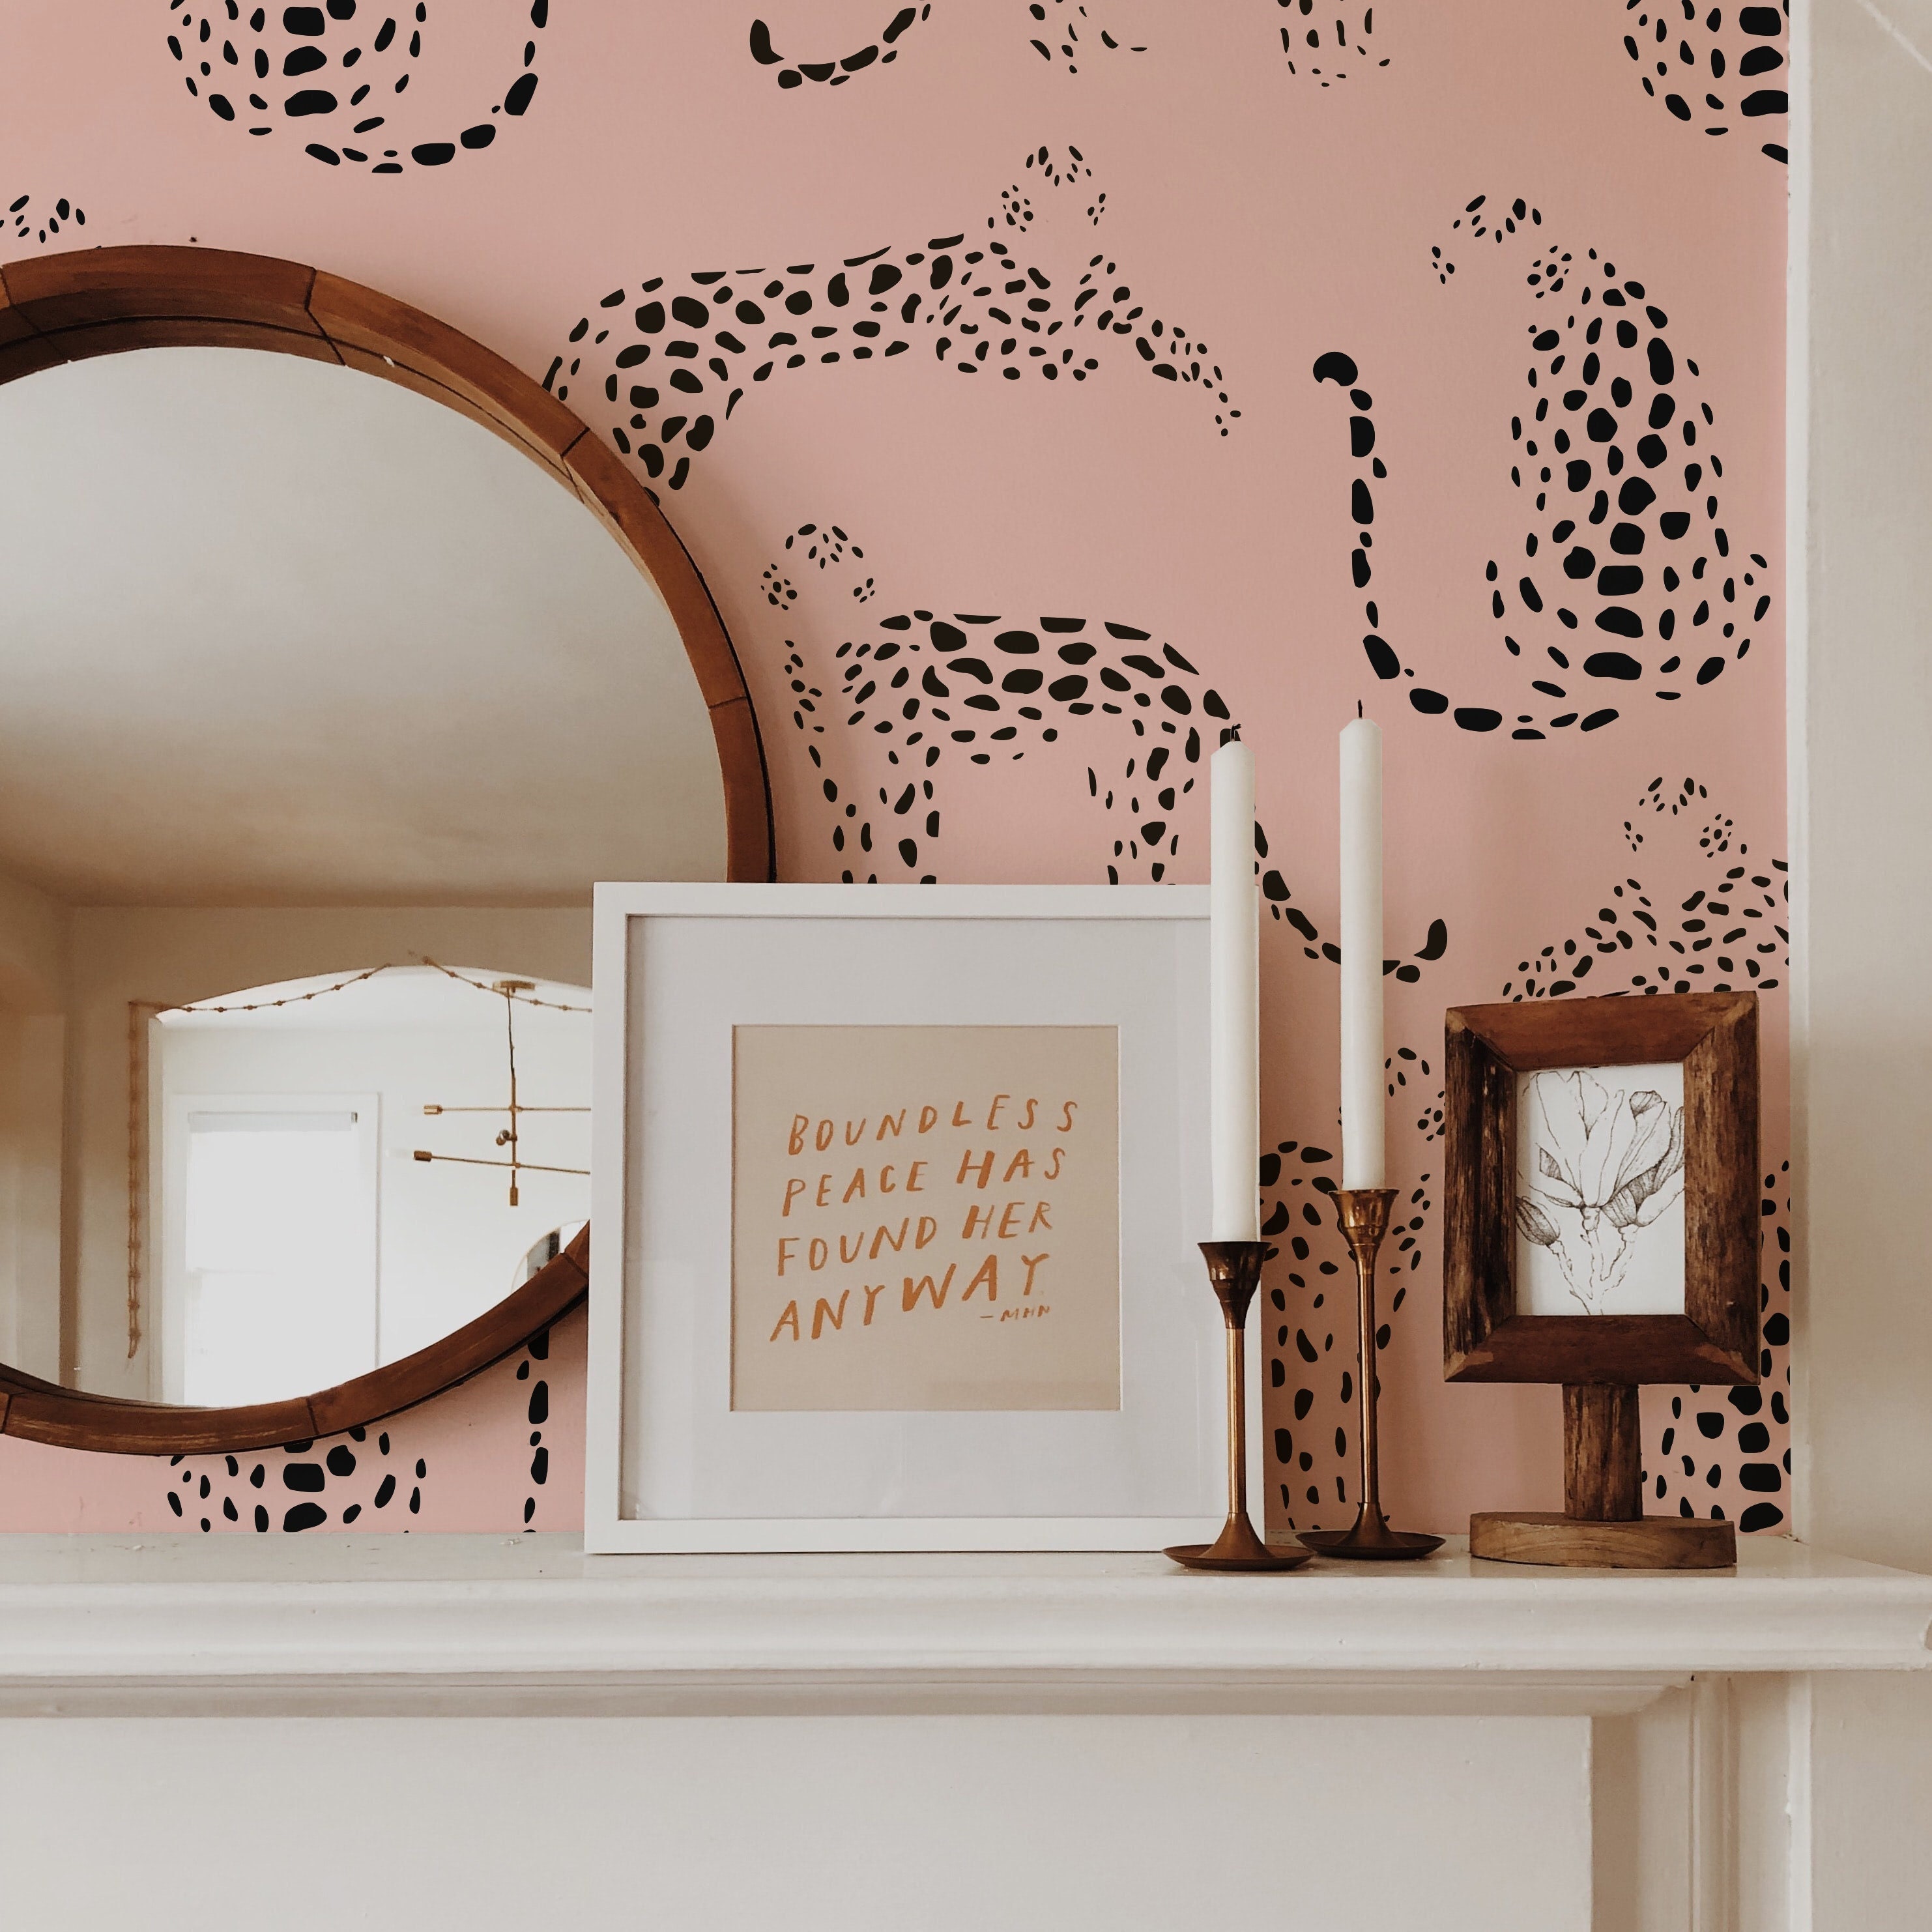 Bright Pink Leopard Print Wallpaper Bedroom Mural 